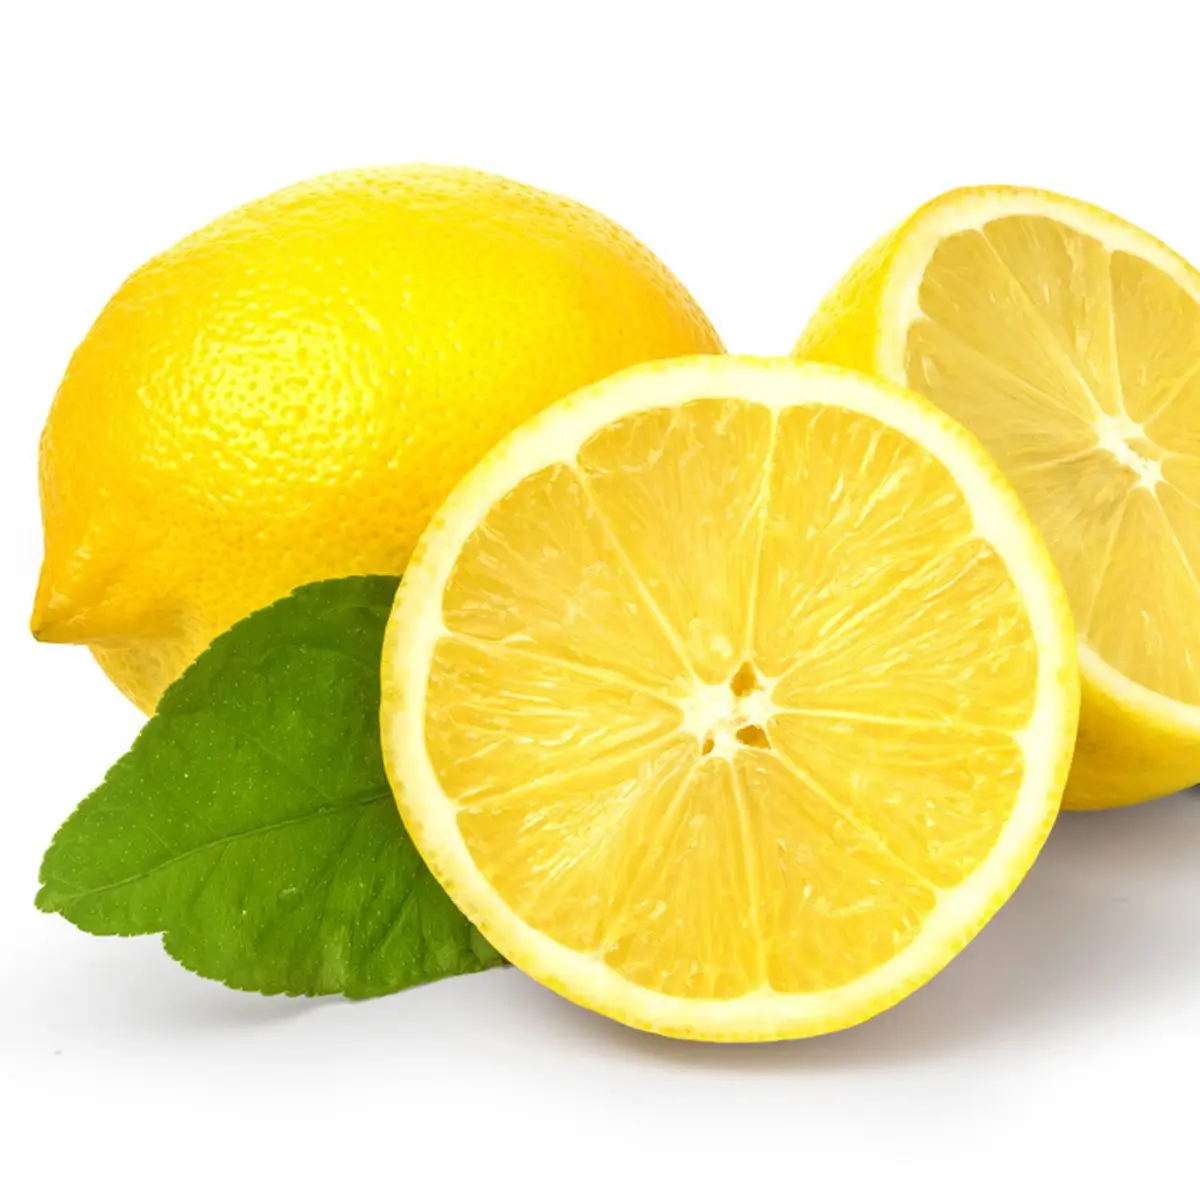 Aceite Esencial de limón certificado, suministro de aceite esencial con propiedades astringentes, destilado a vapor de alta calidad